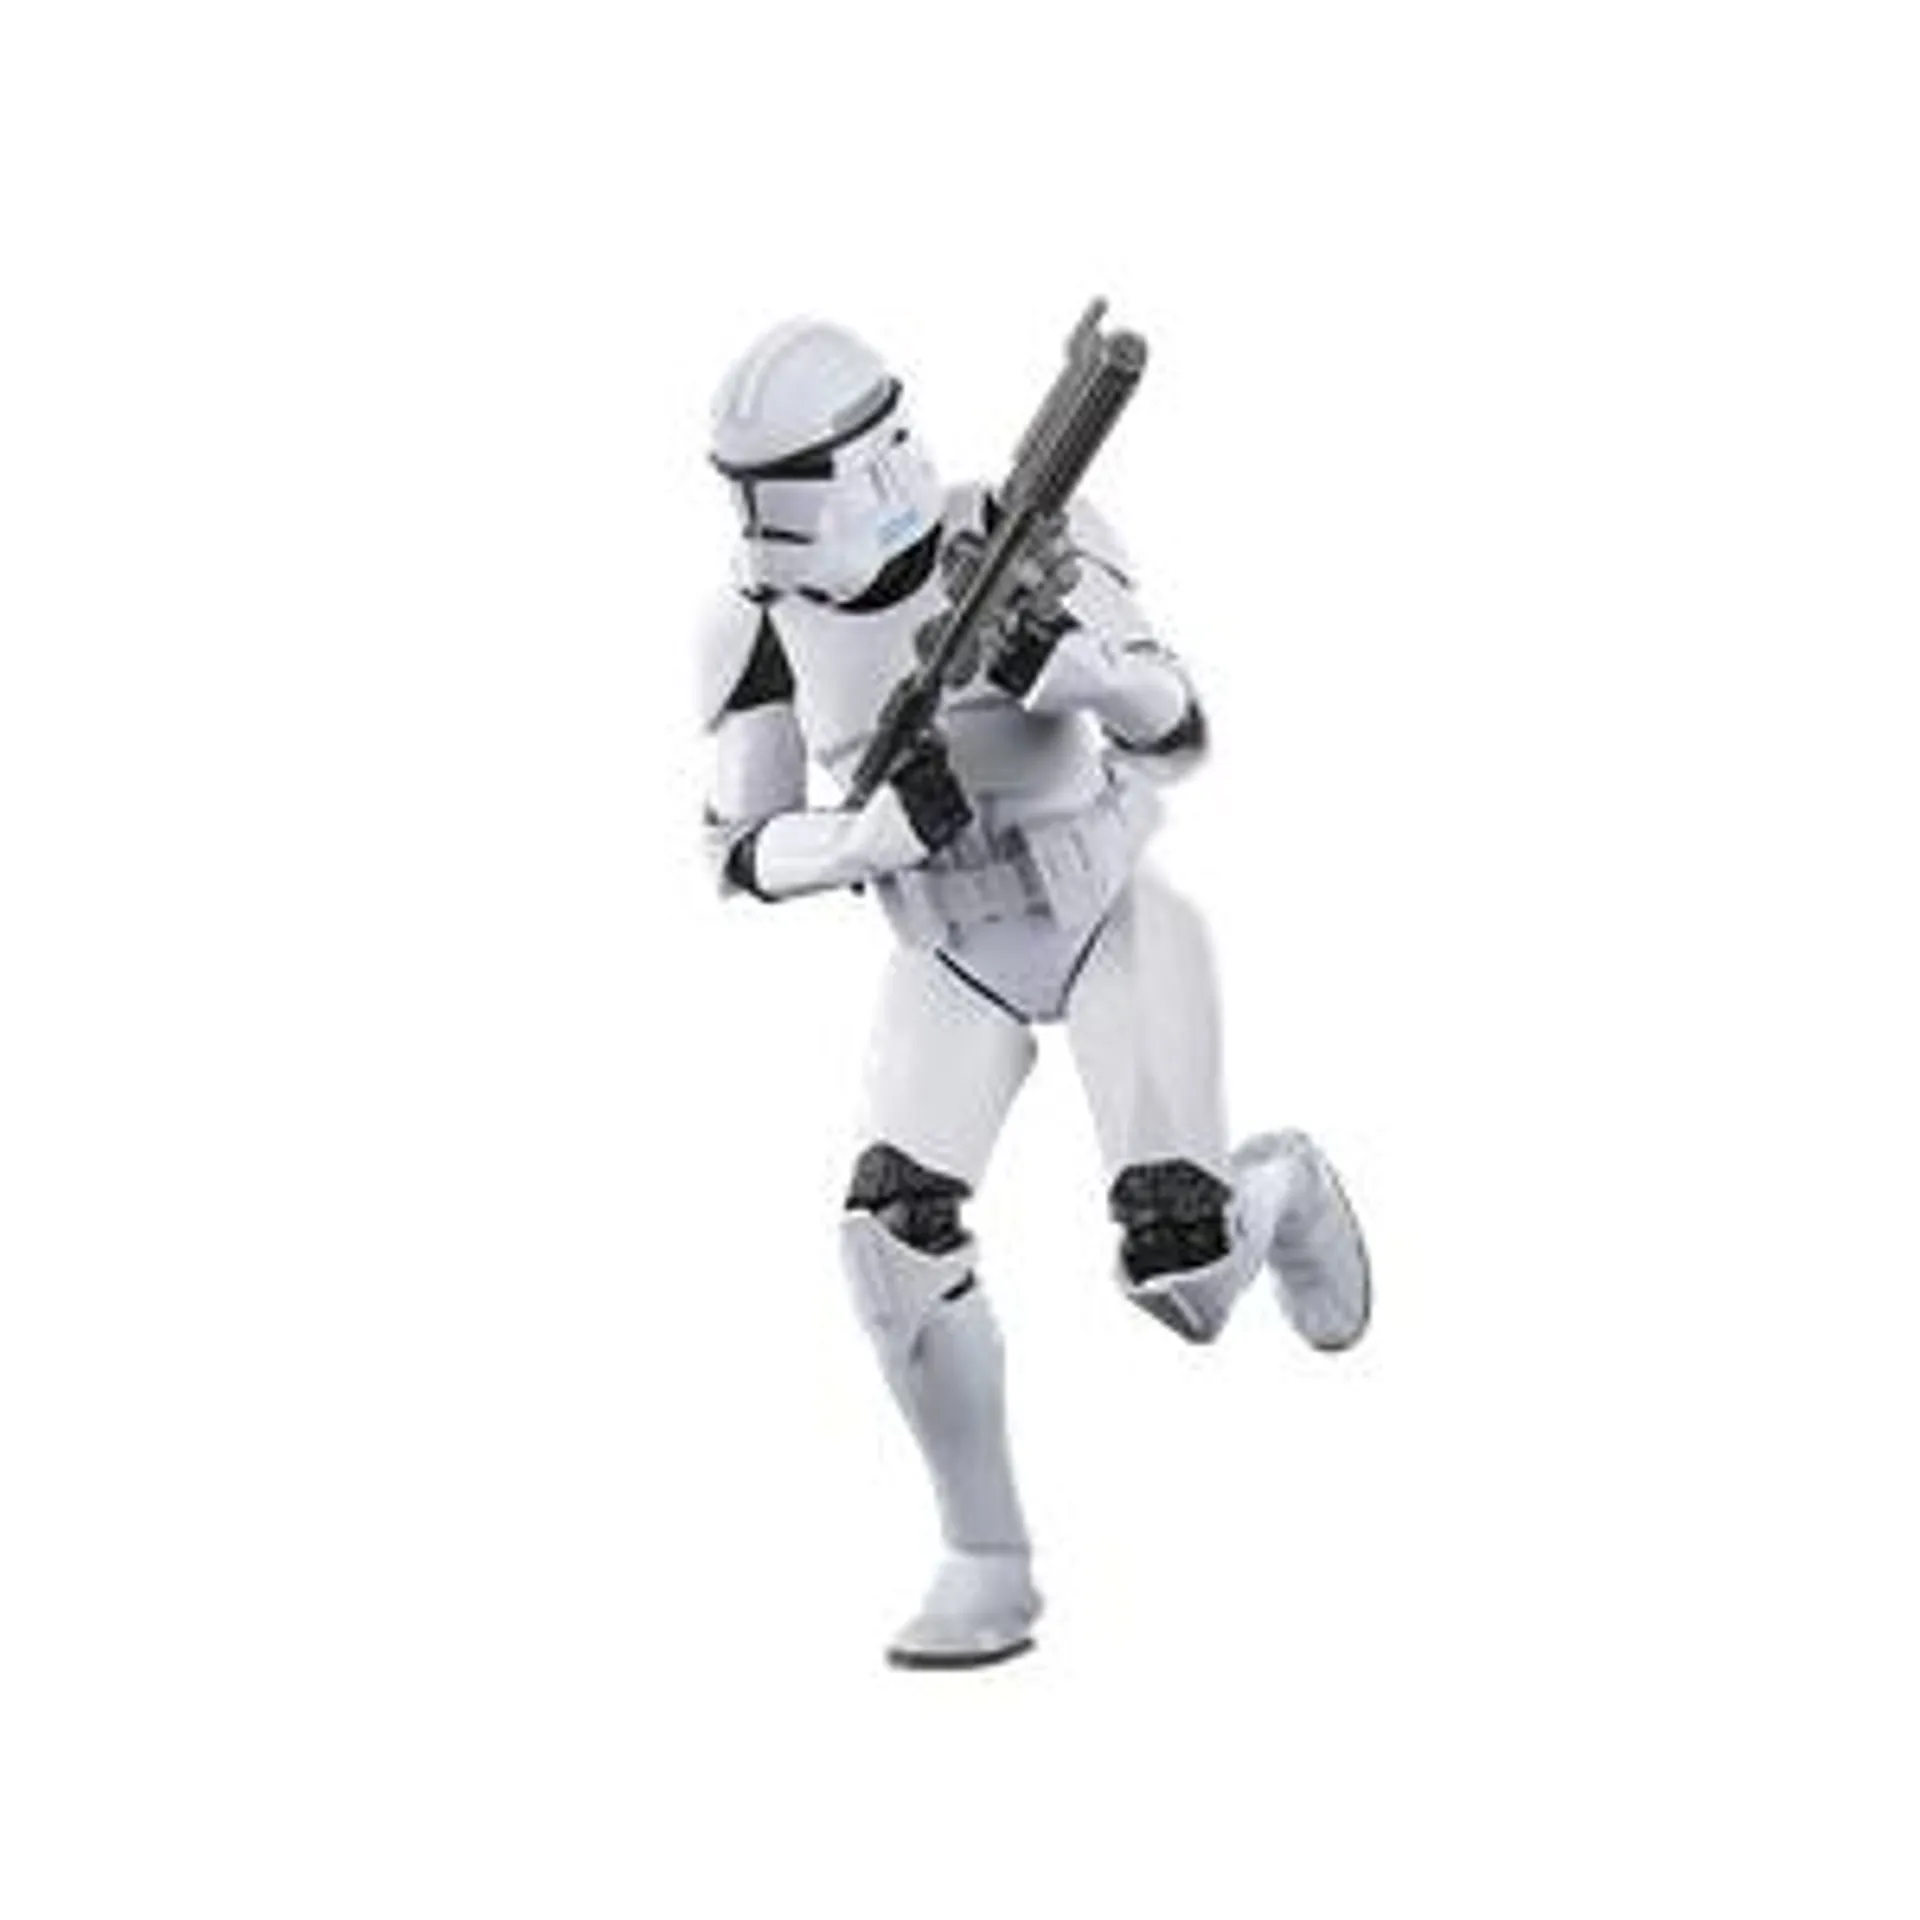 Star Wars: The Clone Wars: Black Series Action Figure: Phase II Clone Trooper